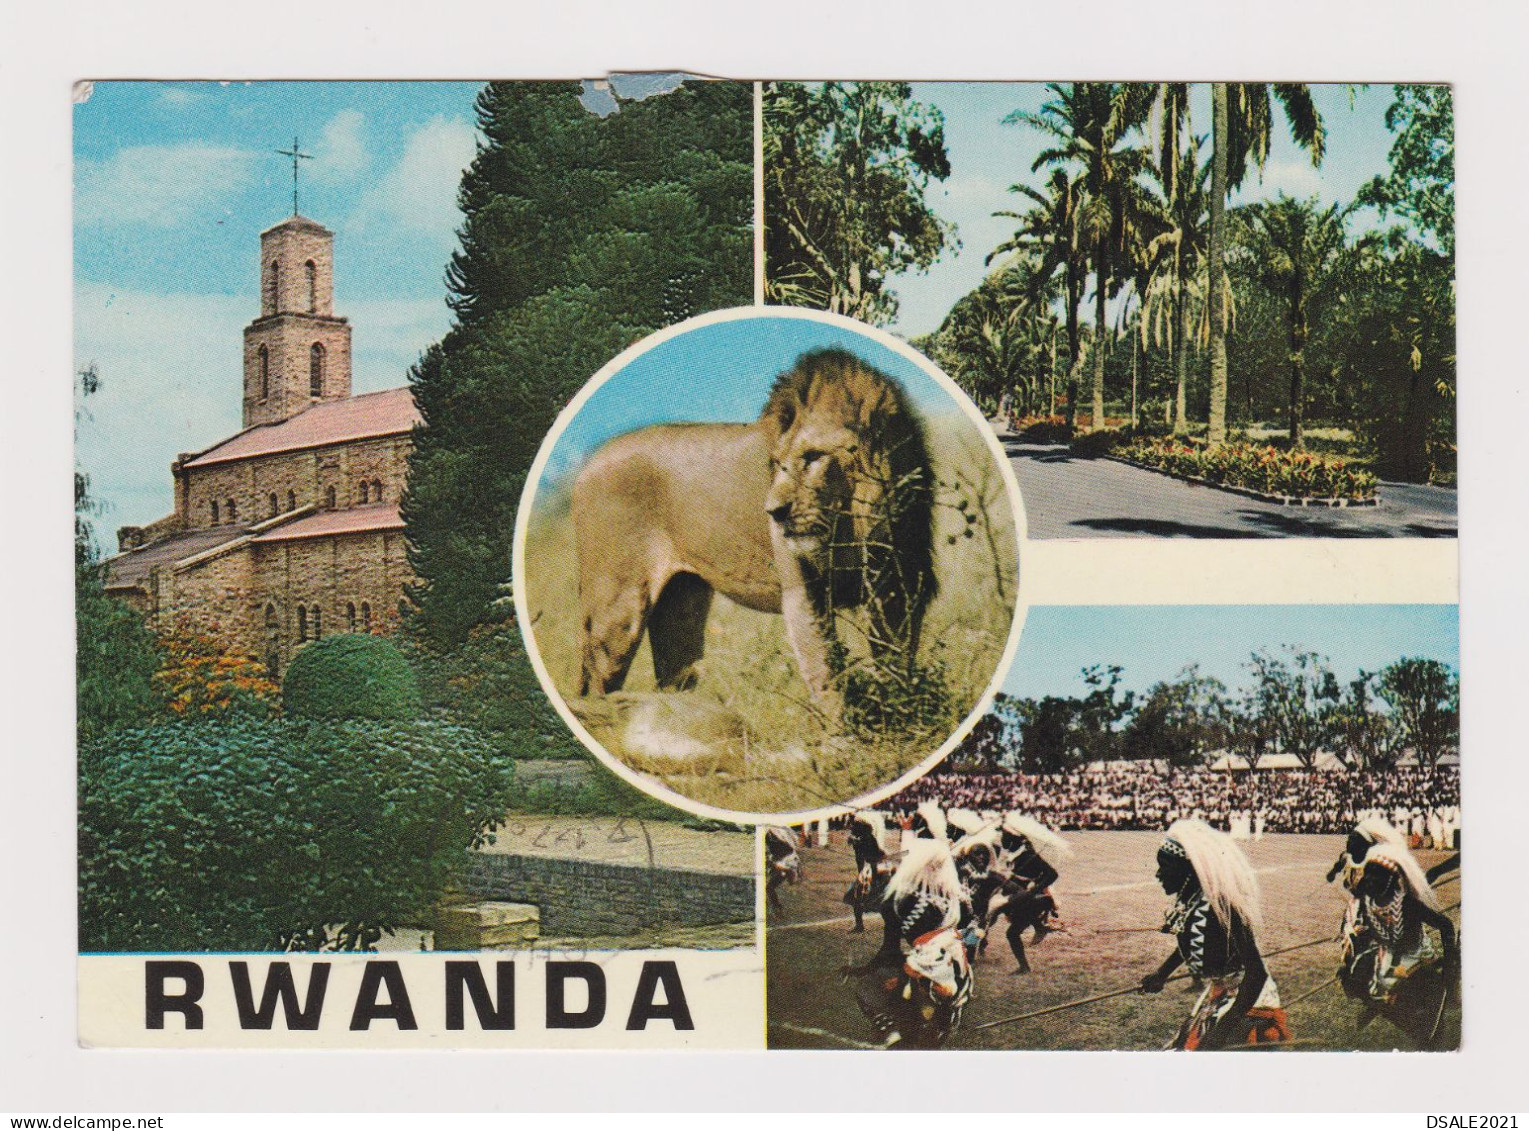 RWANDA Multiple Views Church, Native Dance, Photo Postcard With 18F Topic Stamp 1970s Sent Airmail To Bulgaria (67381) - Storia Postale